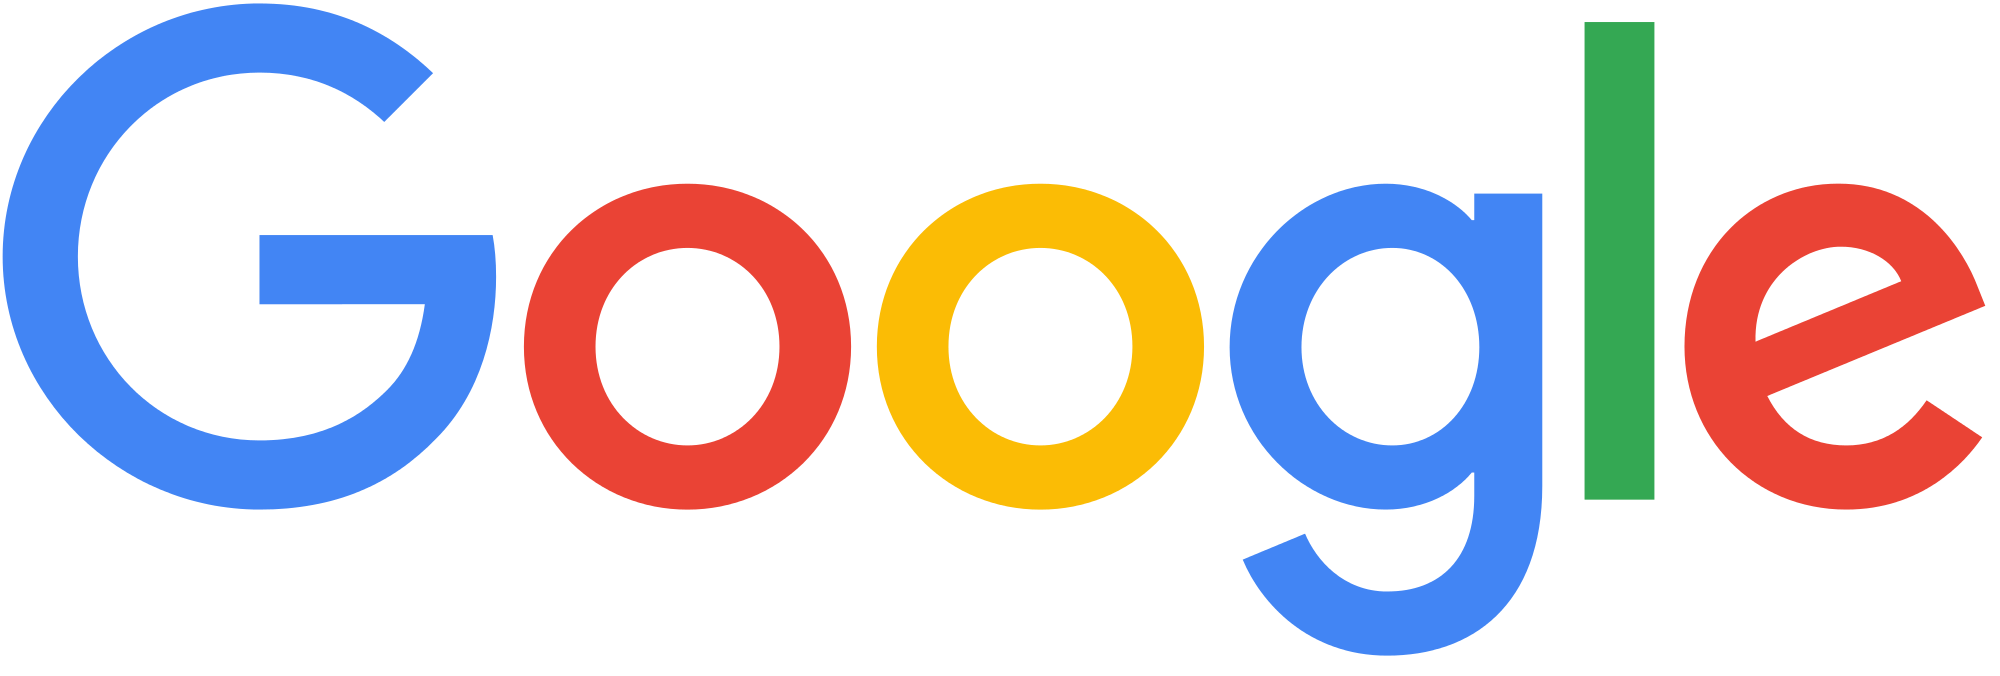 Google Review Kragsol